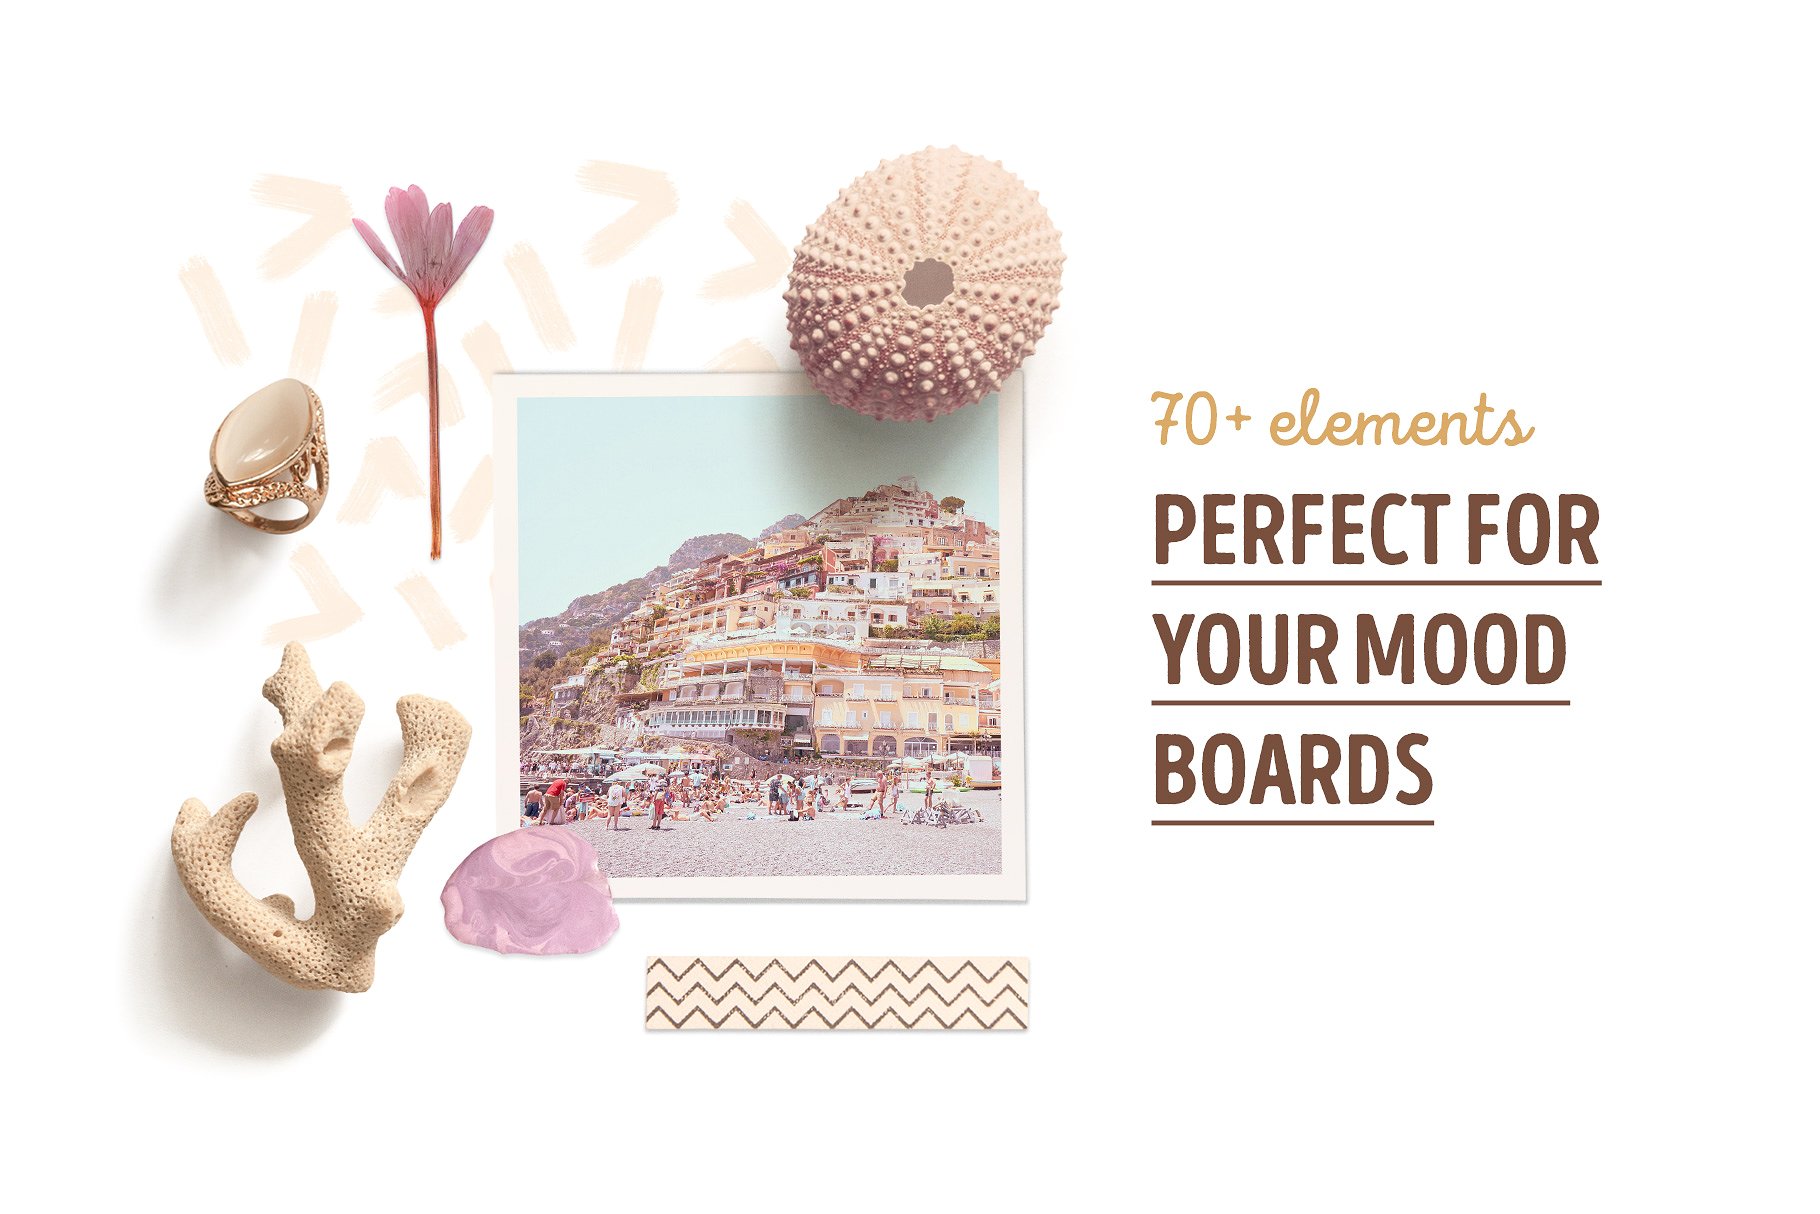 夏日狂欢魅力场景设计工具包 Martinika Mood Boards Collection插图(1)